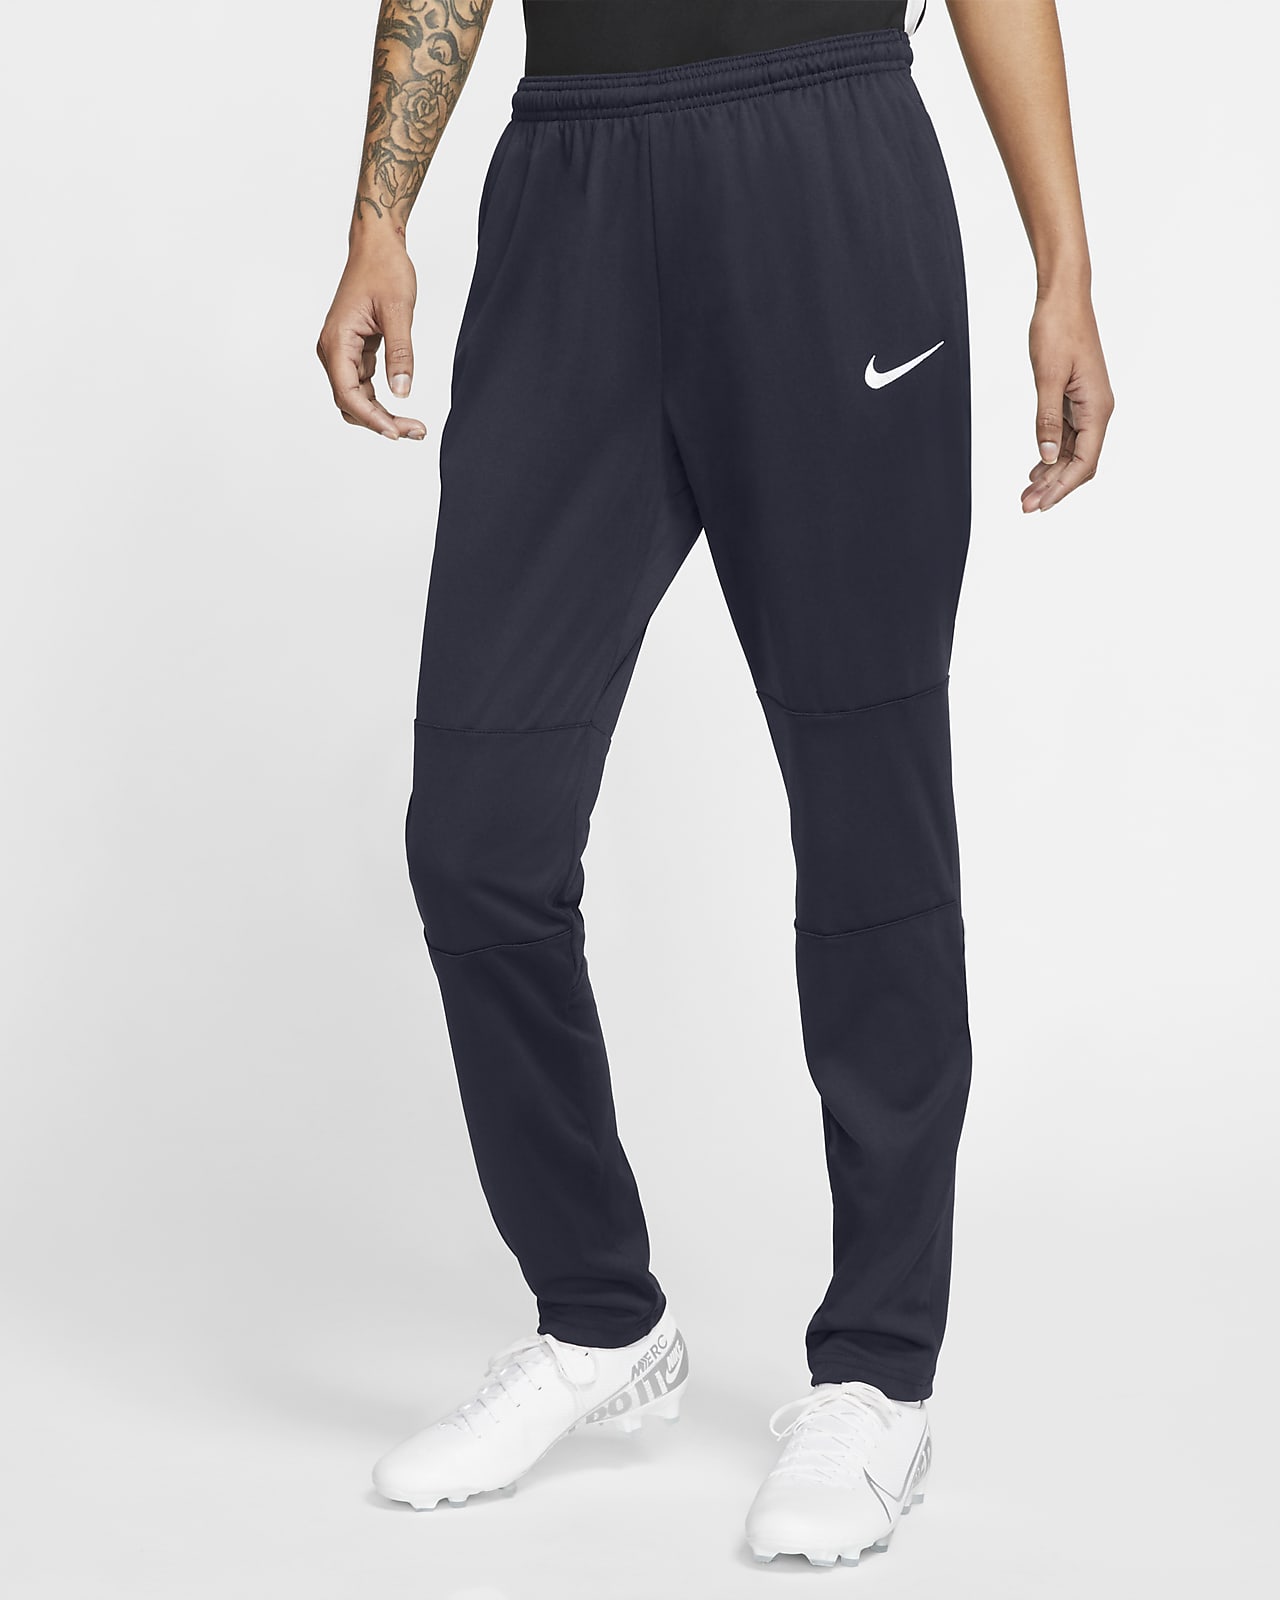 Pantalones de fútbol para mujer Nike Dri-FIT. Nike.com